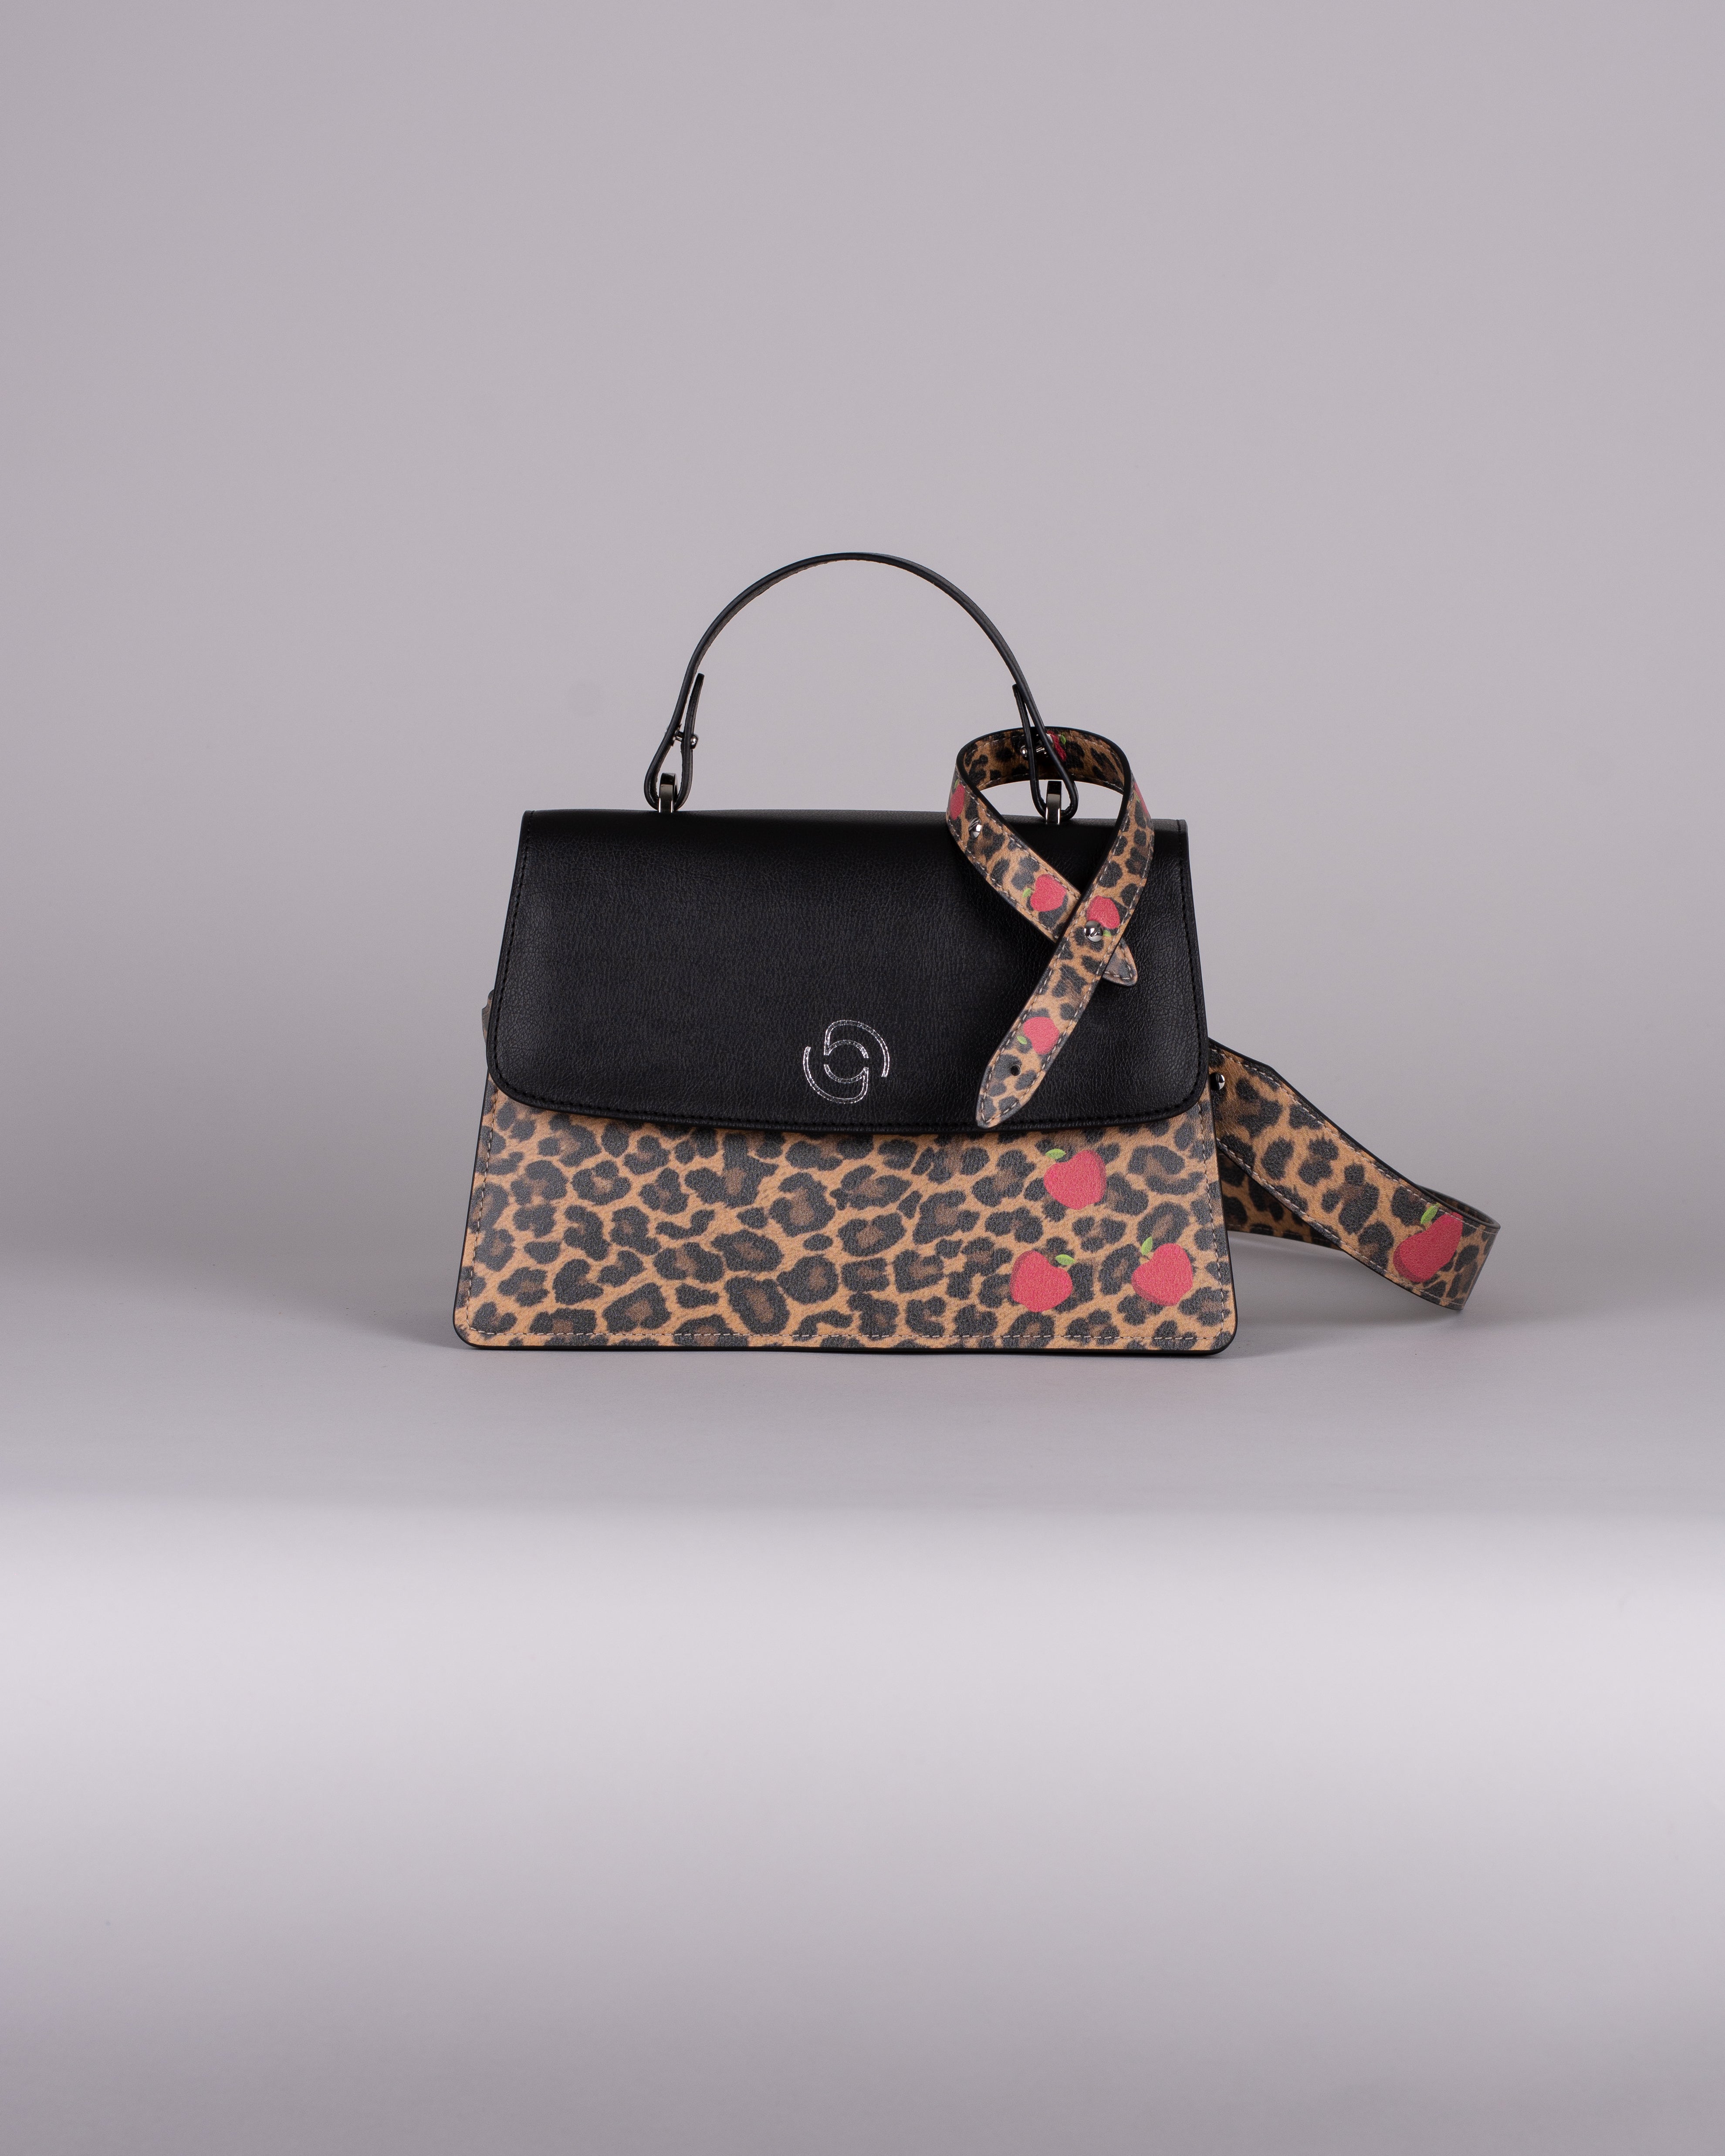 handbag set - black leopard